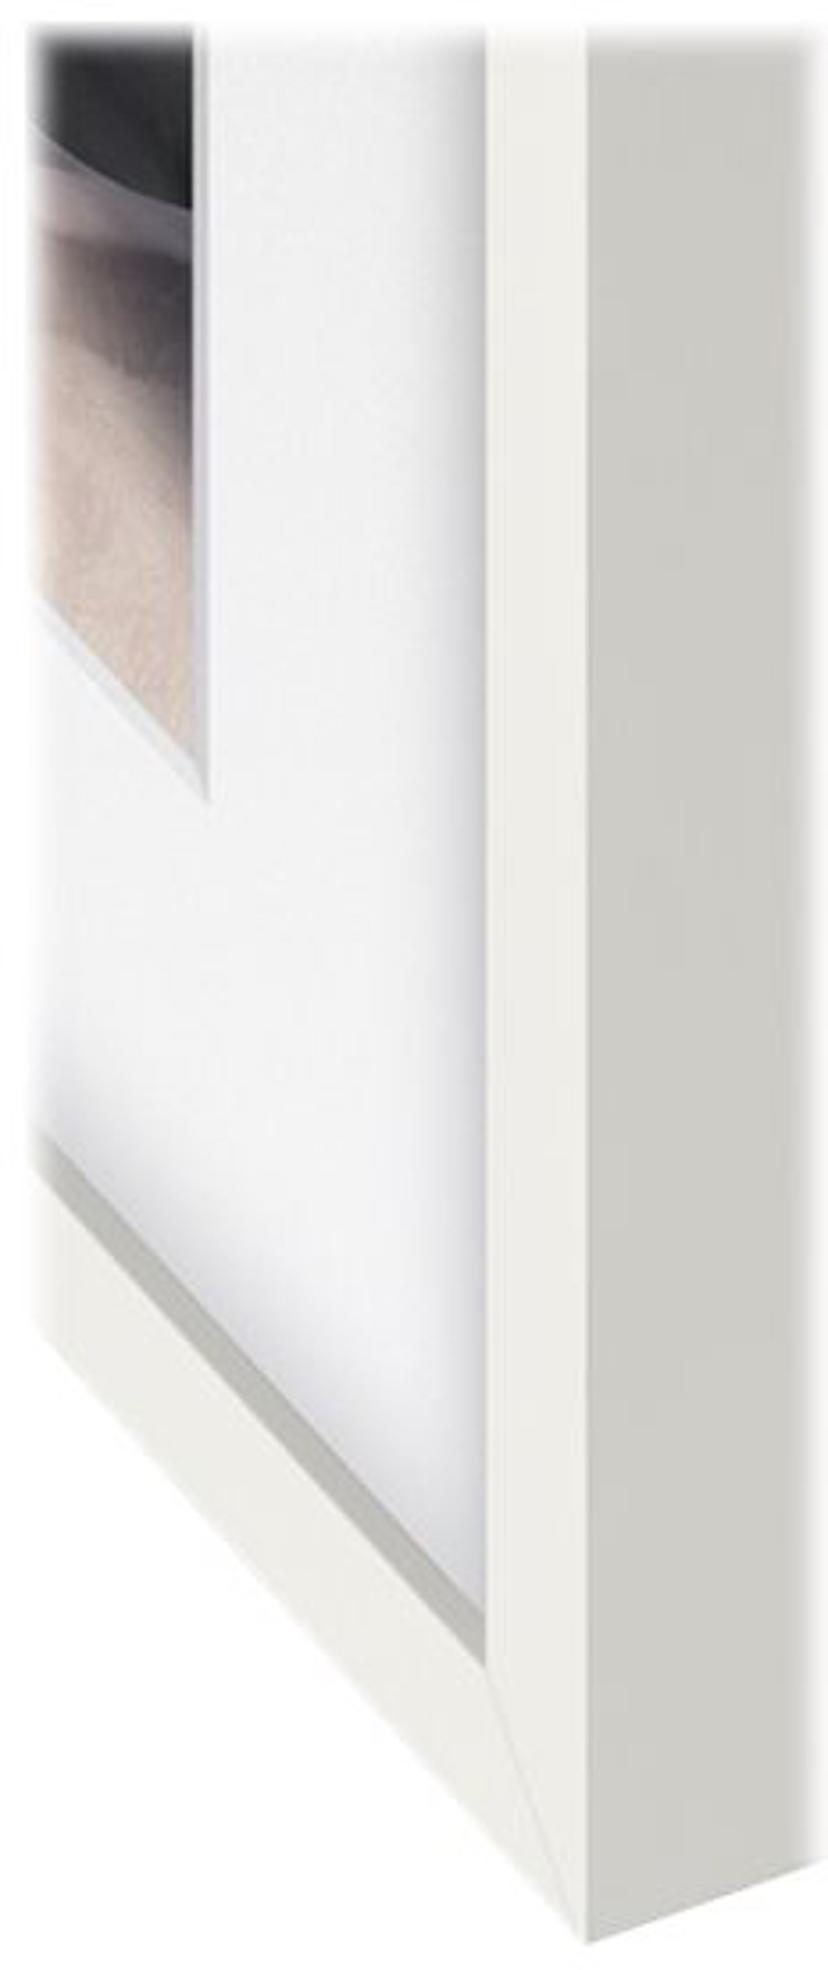 Samsung Frame Ram 75" White